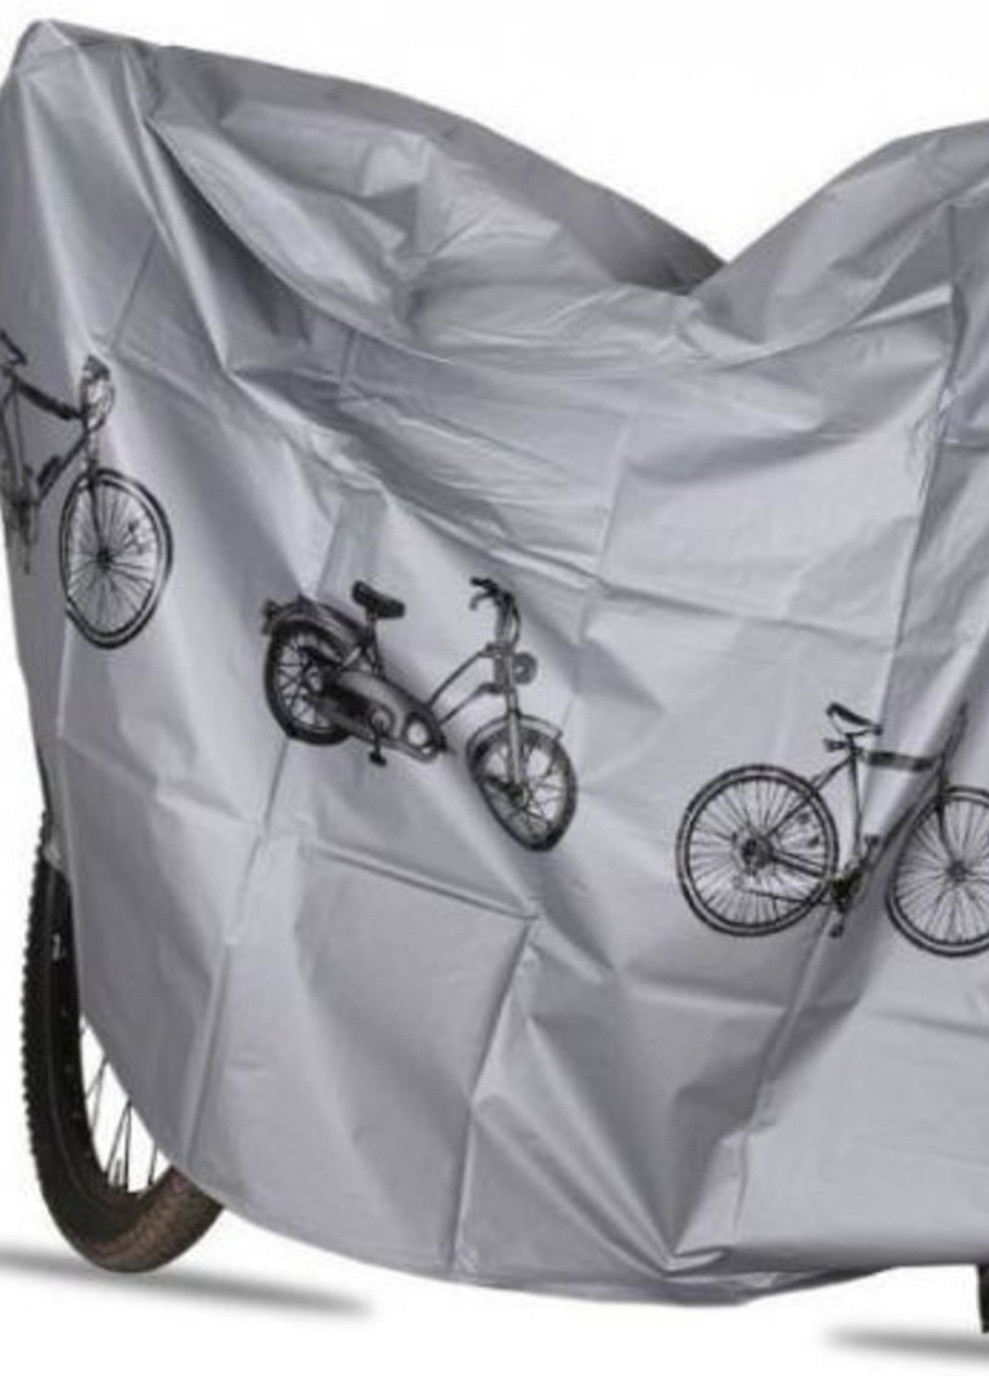 Чехол накидка тент для хранения велосипеда мопеда мотоцикла скутера 210х100 см (5412475836-Т) Серая Francesco Marconi (227971108)